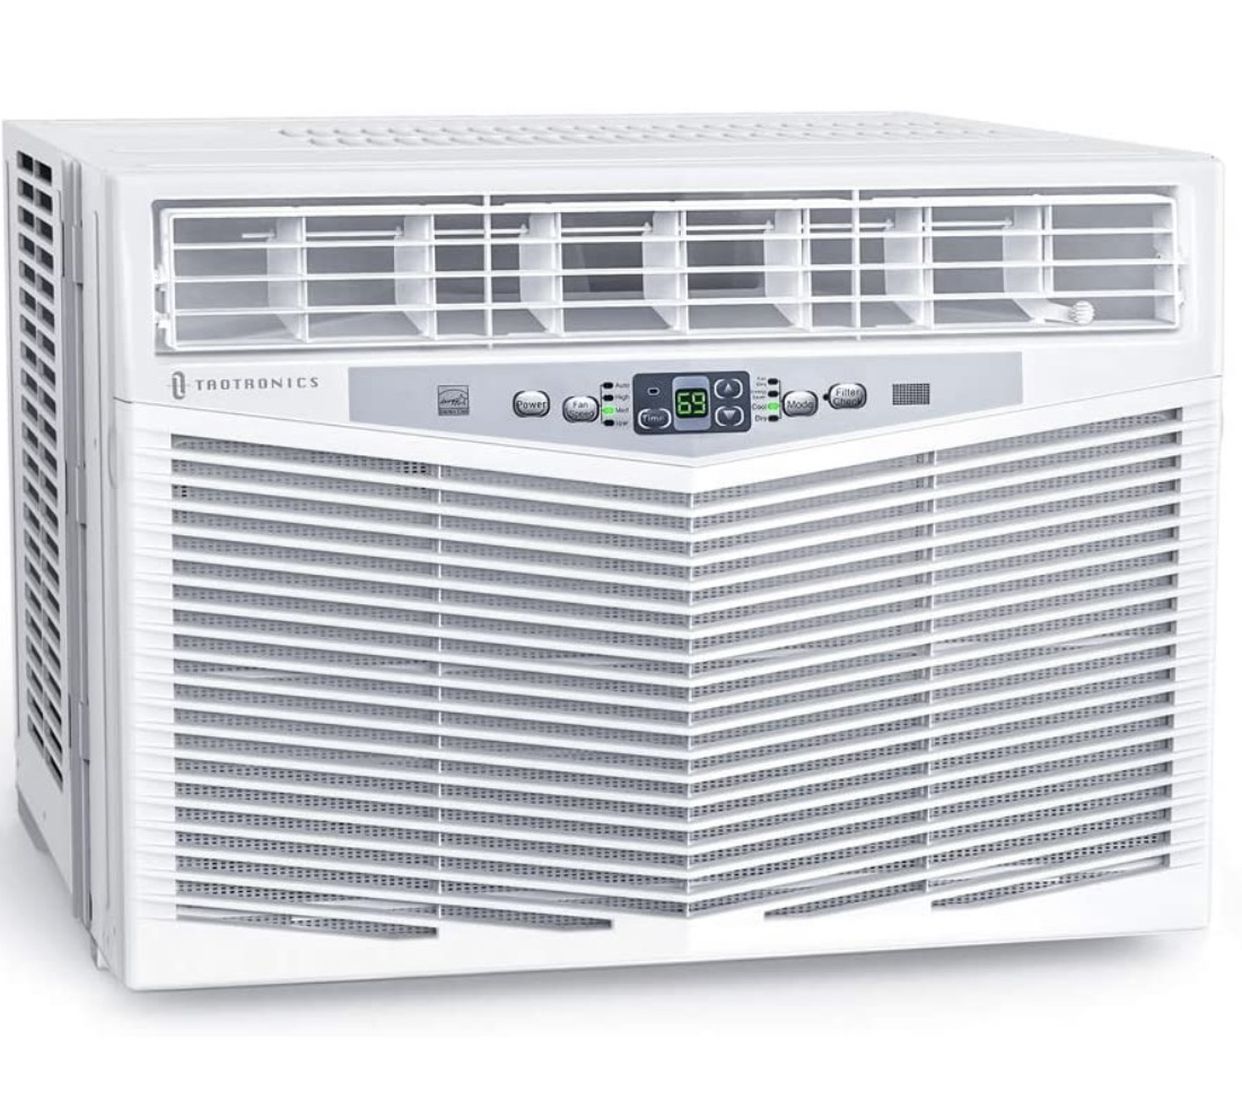 TaoTronics TT-AC001 Window Air Conditioner 10000 BTU Window AC Unit with Remote Control, 3 Fan Speed, Dehumidifier Mode, Sleep Mode, Timer, Digital Di